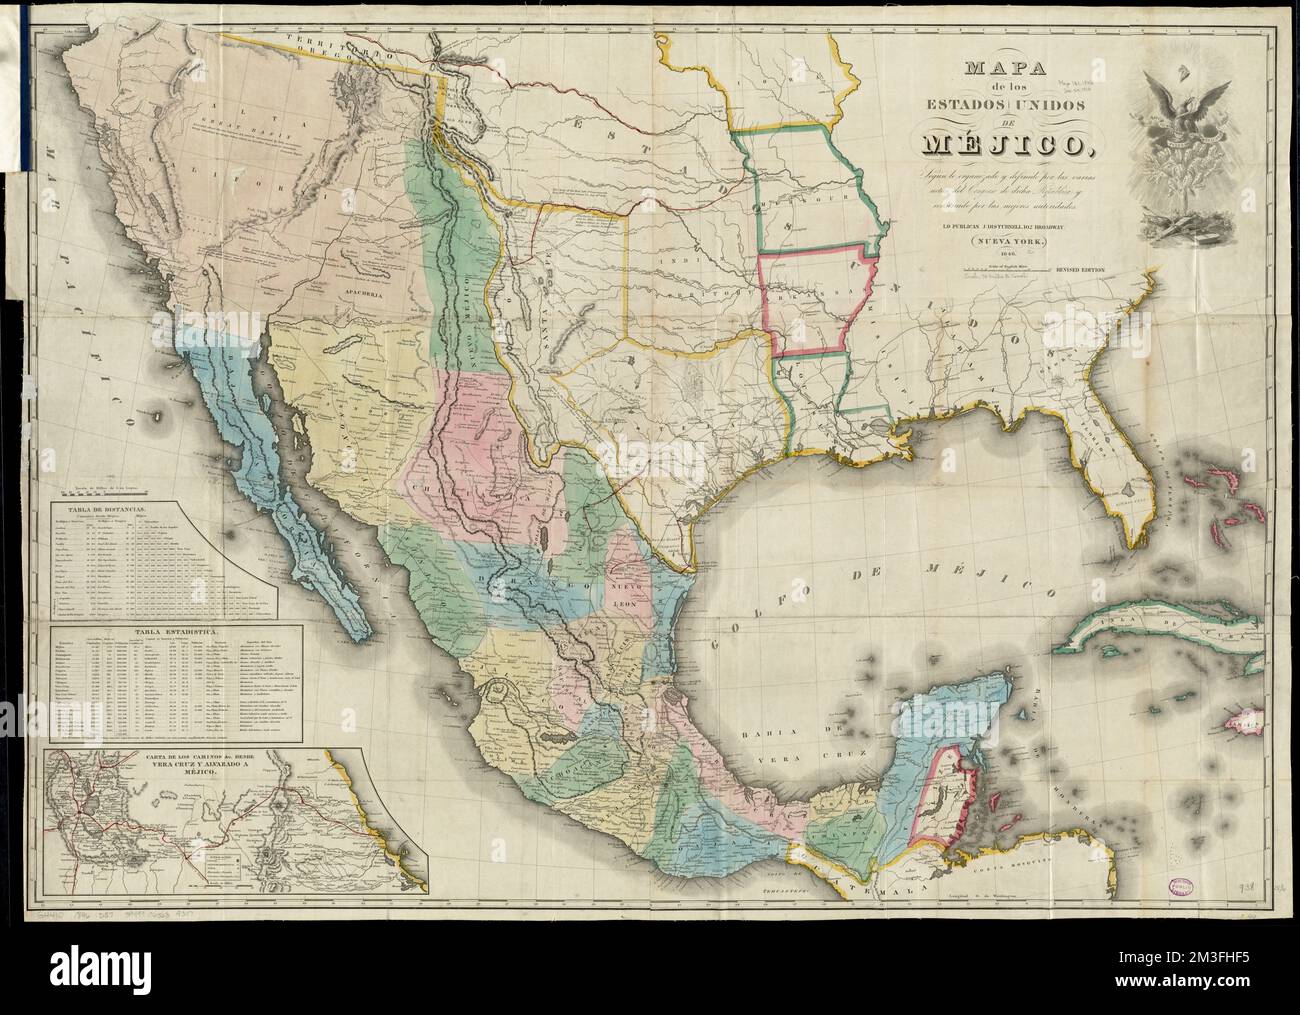 Mapa de los Estados Unidos de Méjico , Mexico, Maps, Southwest, New, Maps, Southwestern States, Maps Norman B. Leventhal Map Center Collection Stock Photo